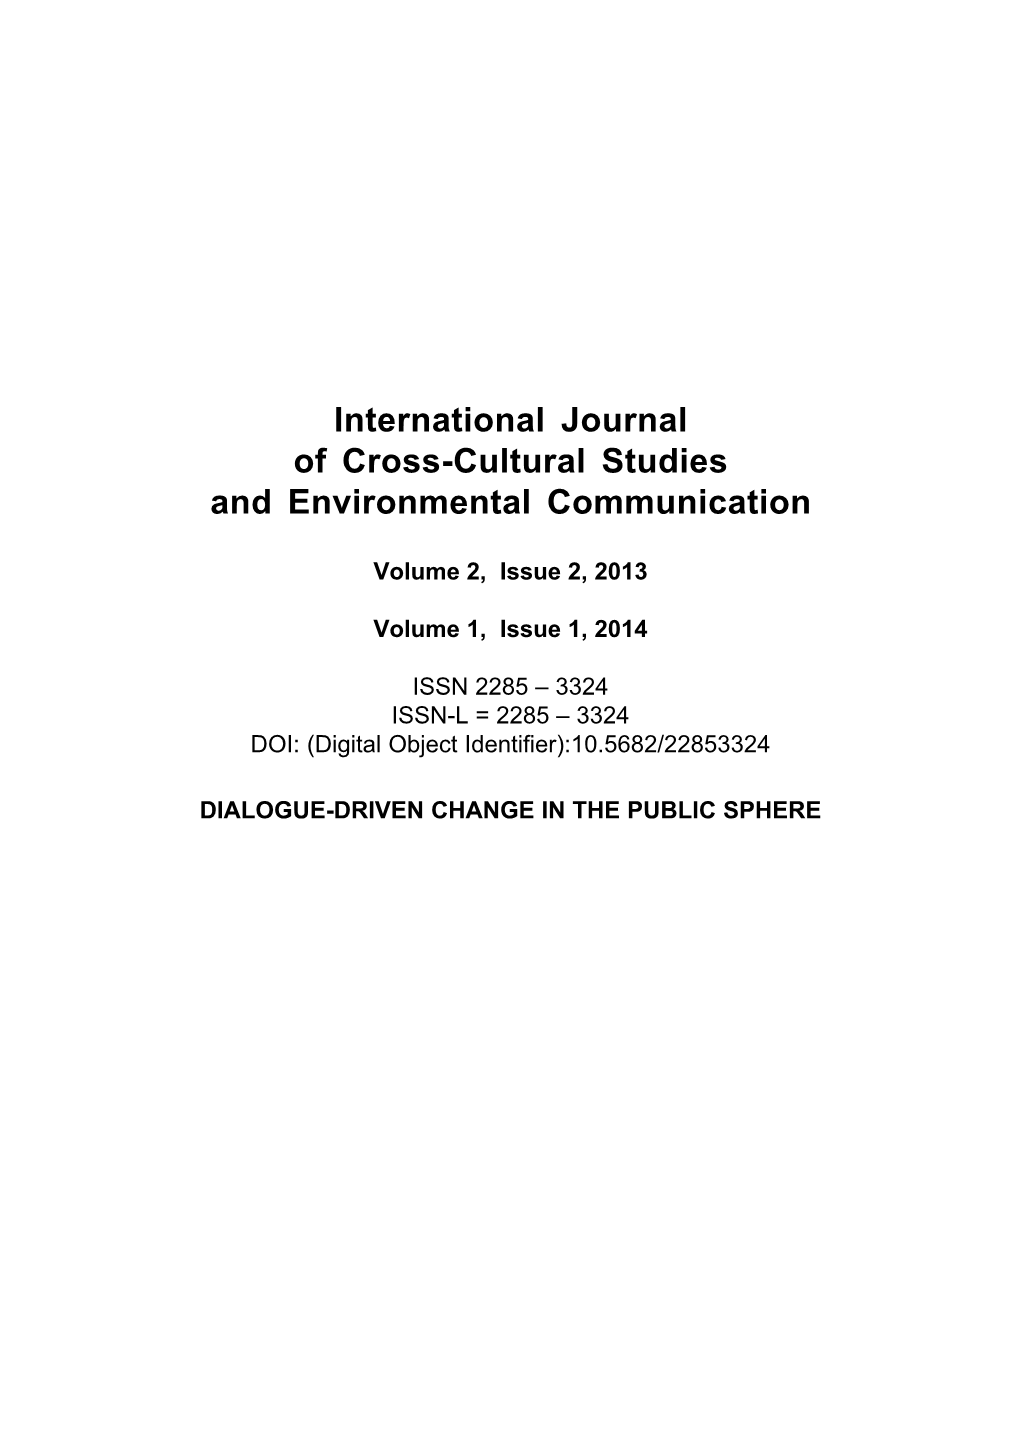 IJCCSEC, Volume 2, Issue 2, 2013 & Volume 1, Issue 1, 2014